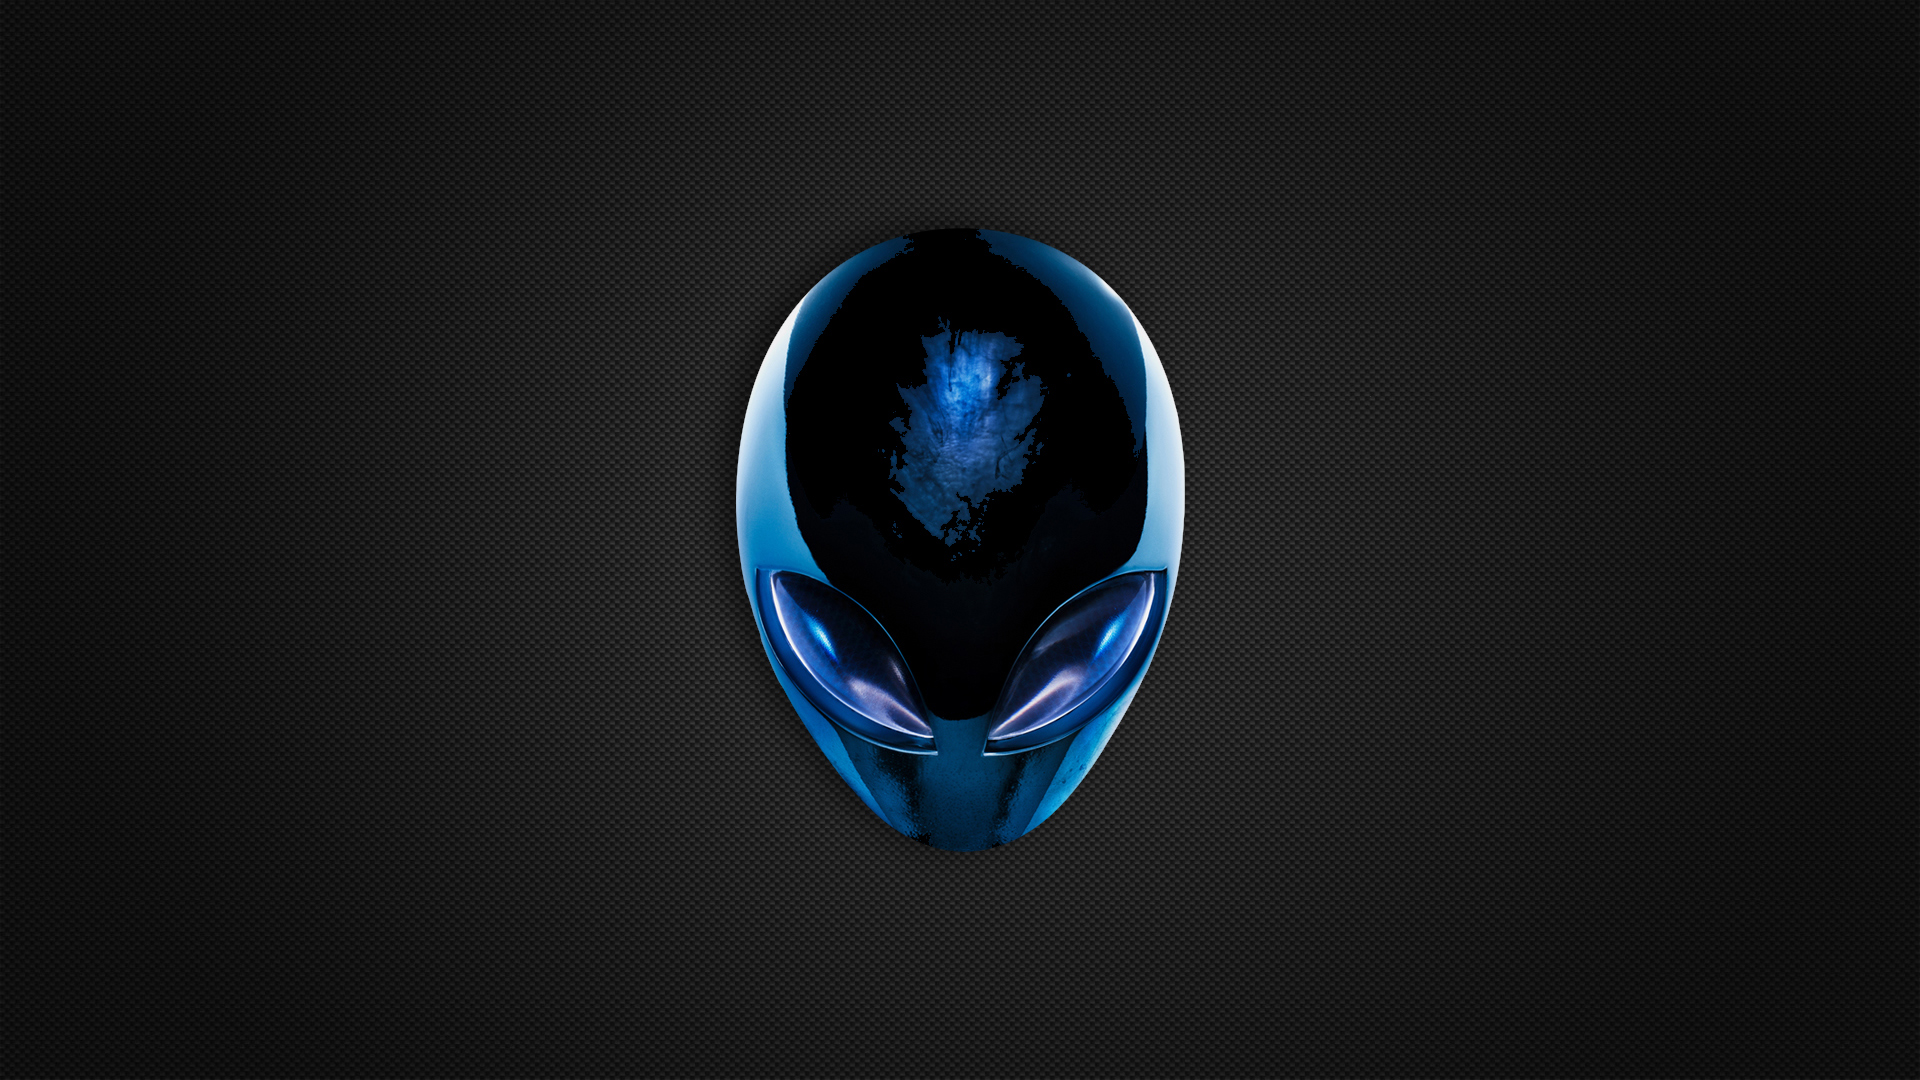 alienware dark blue logo background hd 1920x1080 1080p wallpaper